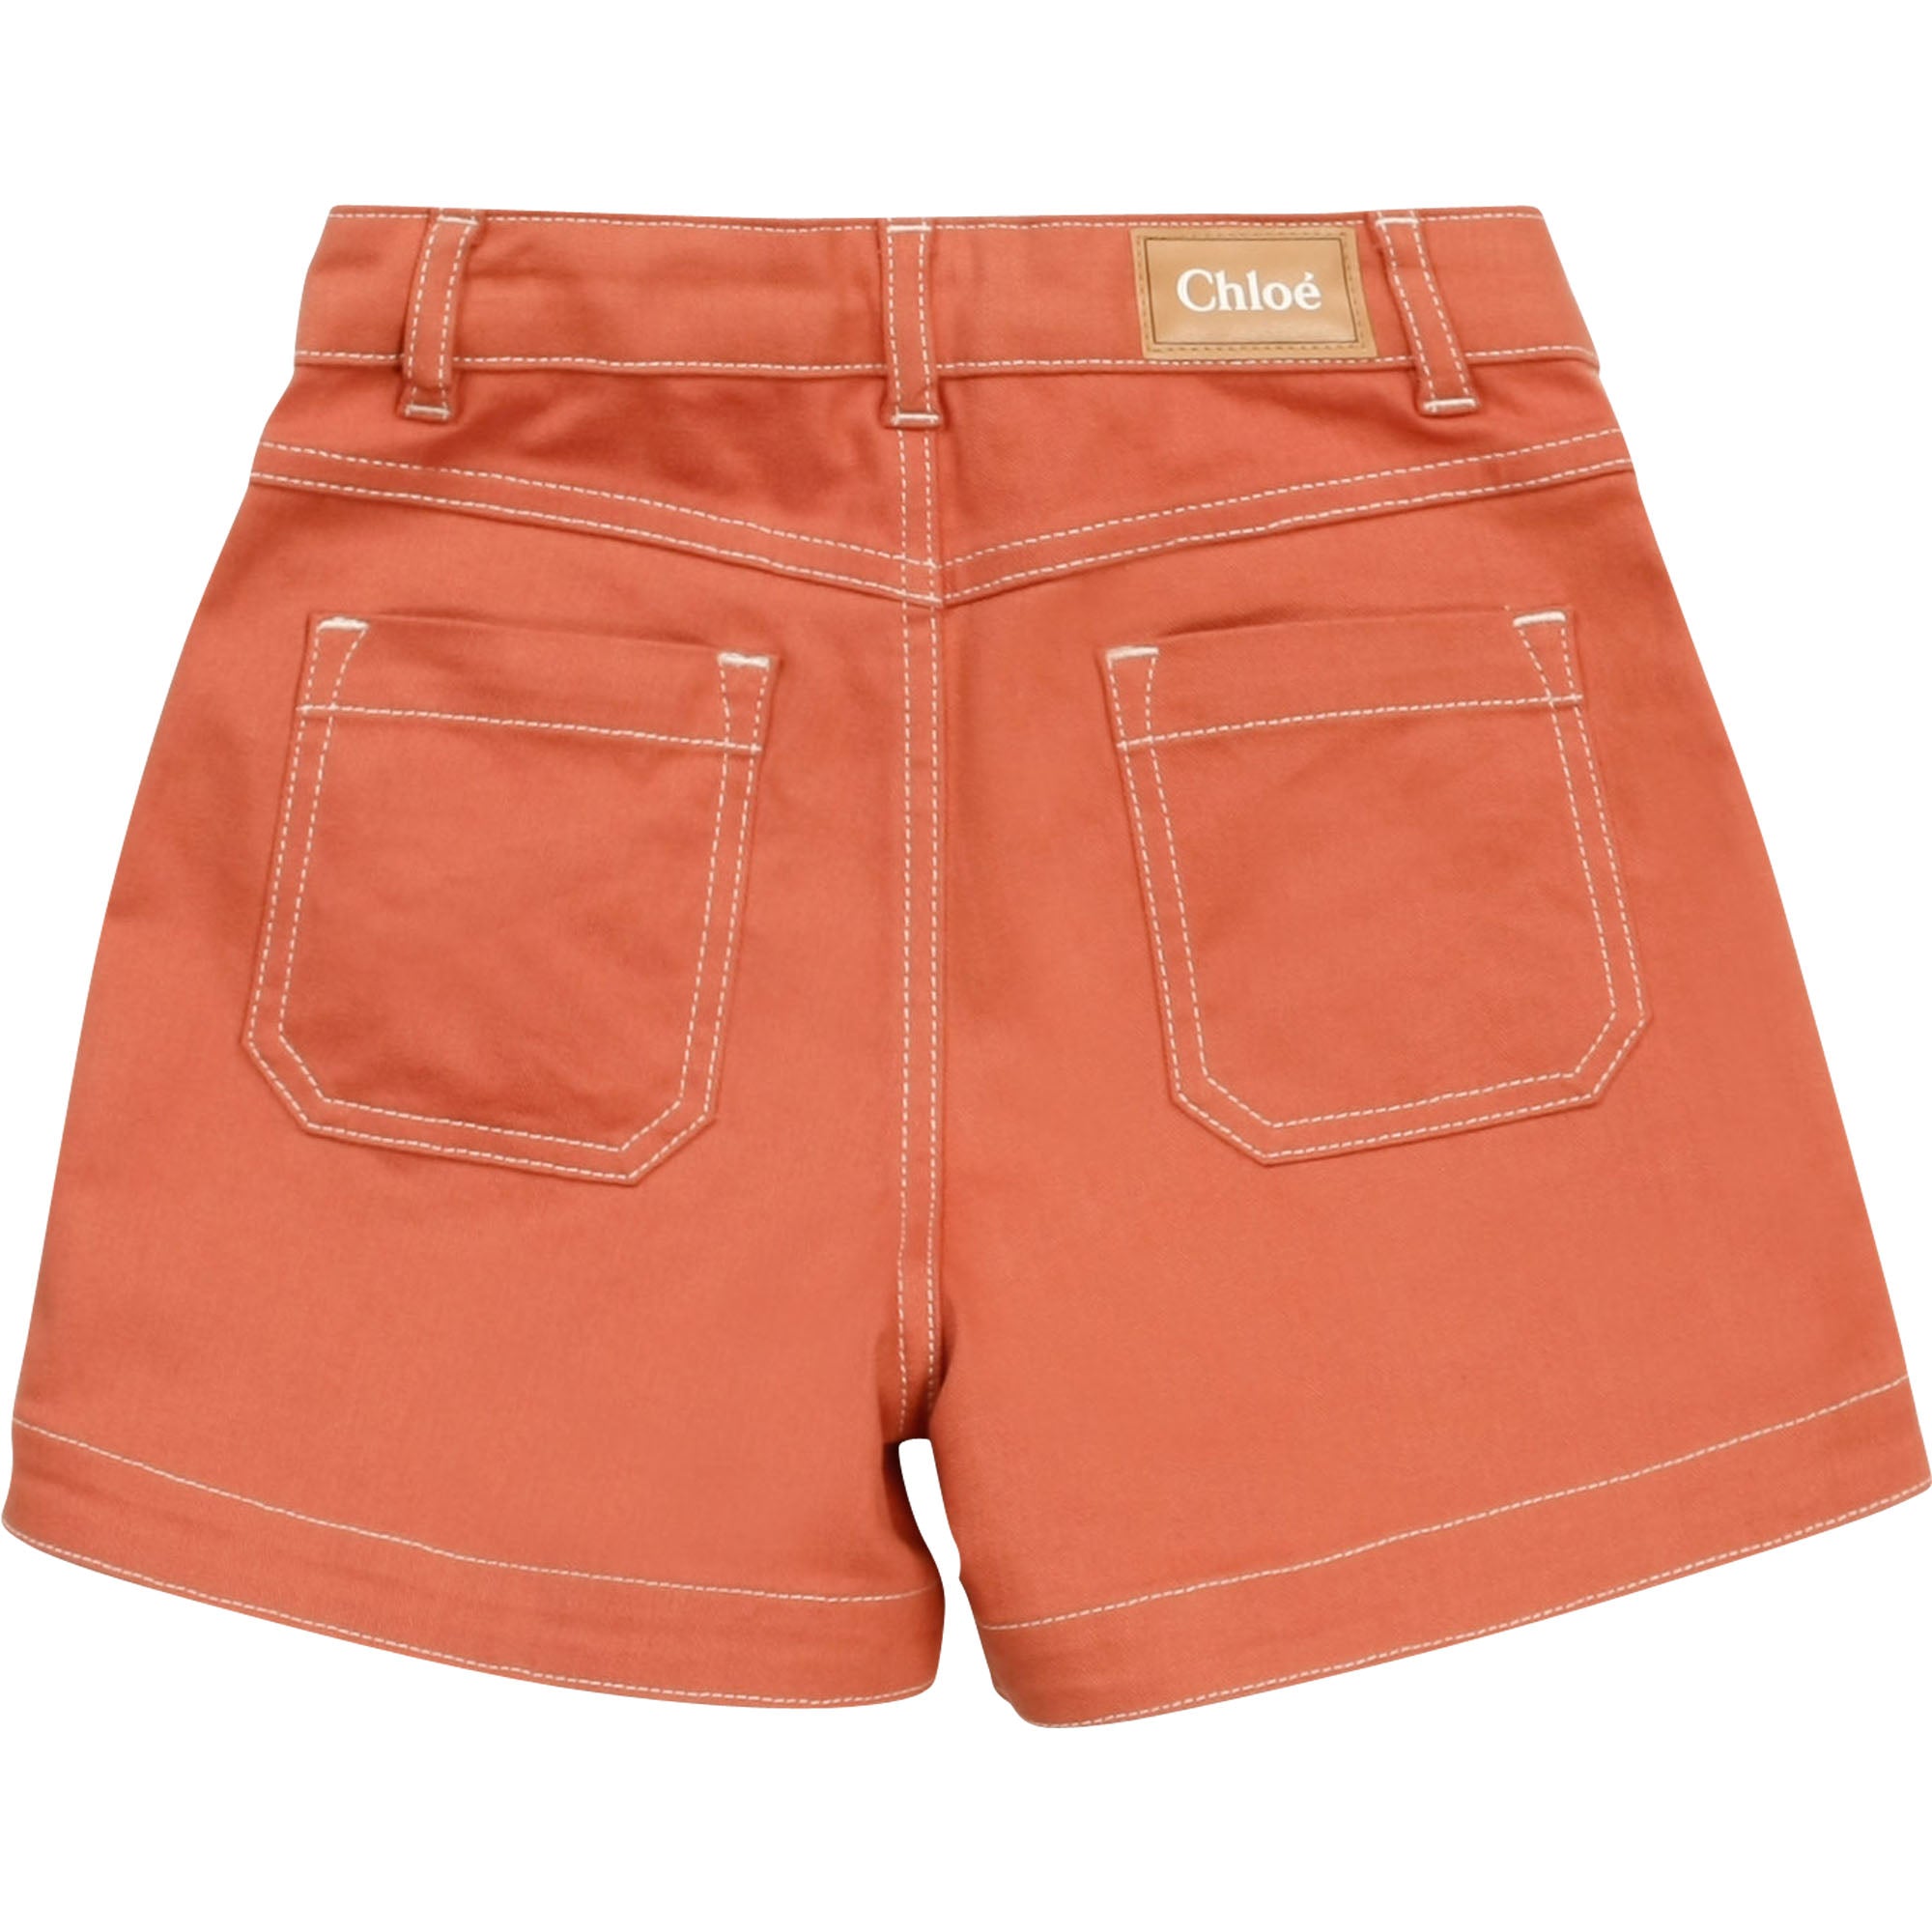 Girls Orange Cotton Shorts